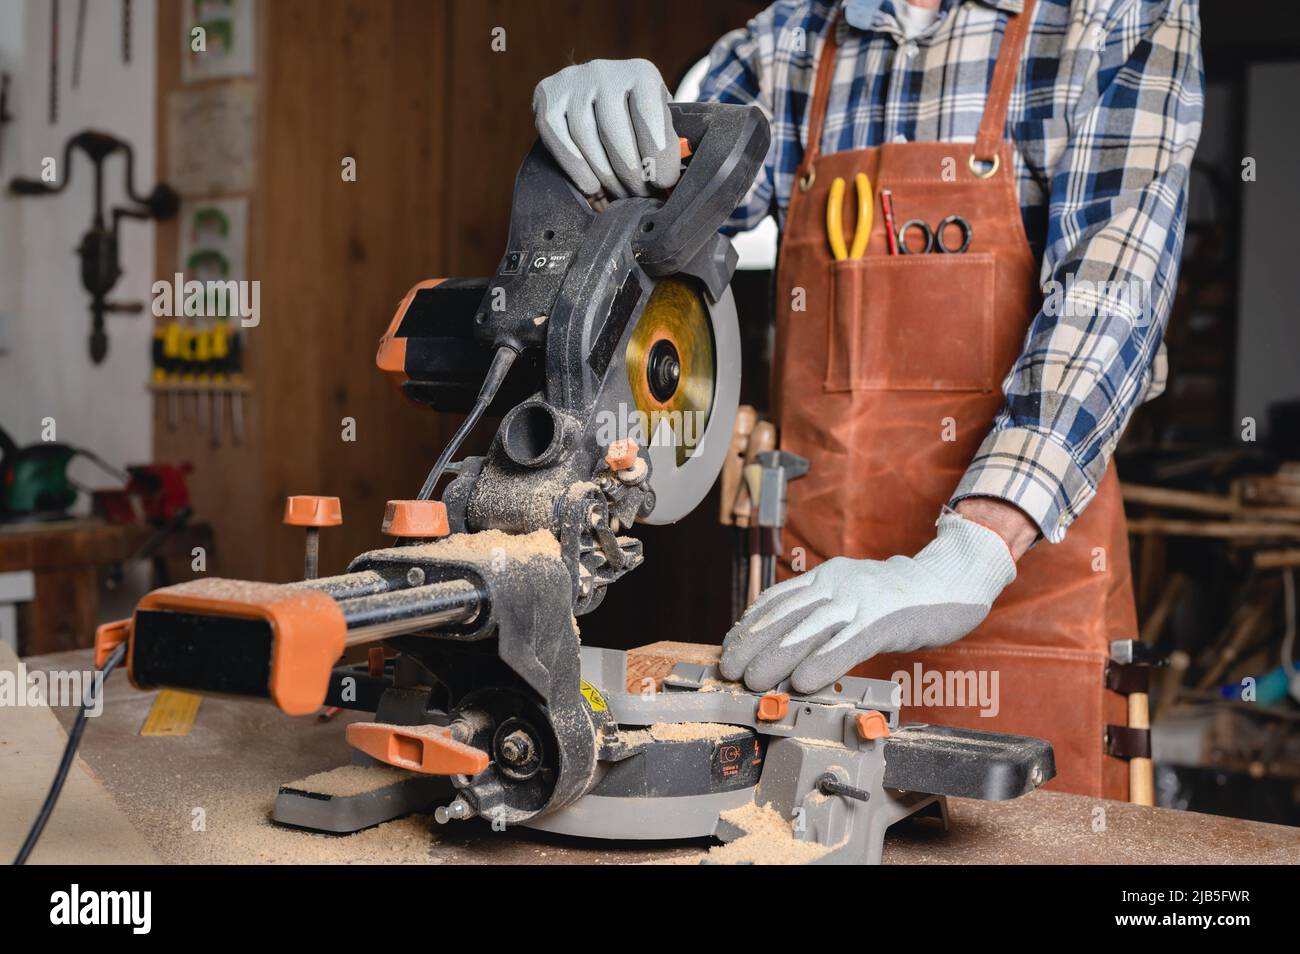 Carpenter using an electric circular saw, cutting piece of wood. High quality photo. Stock Photo